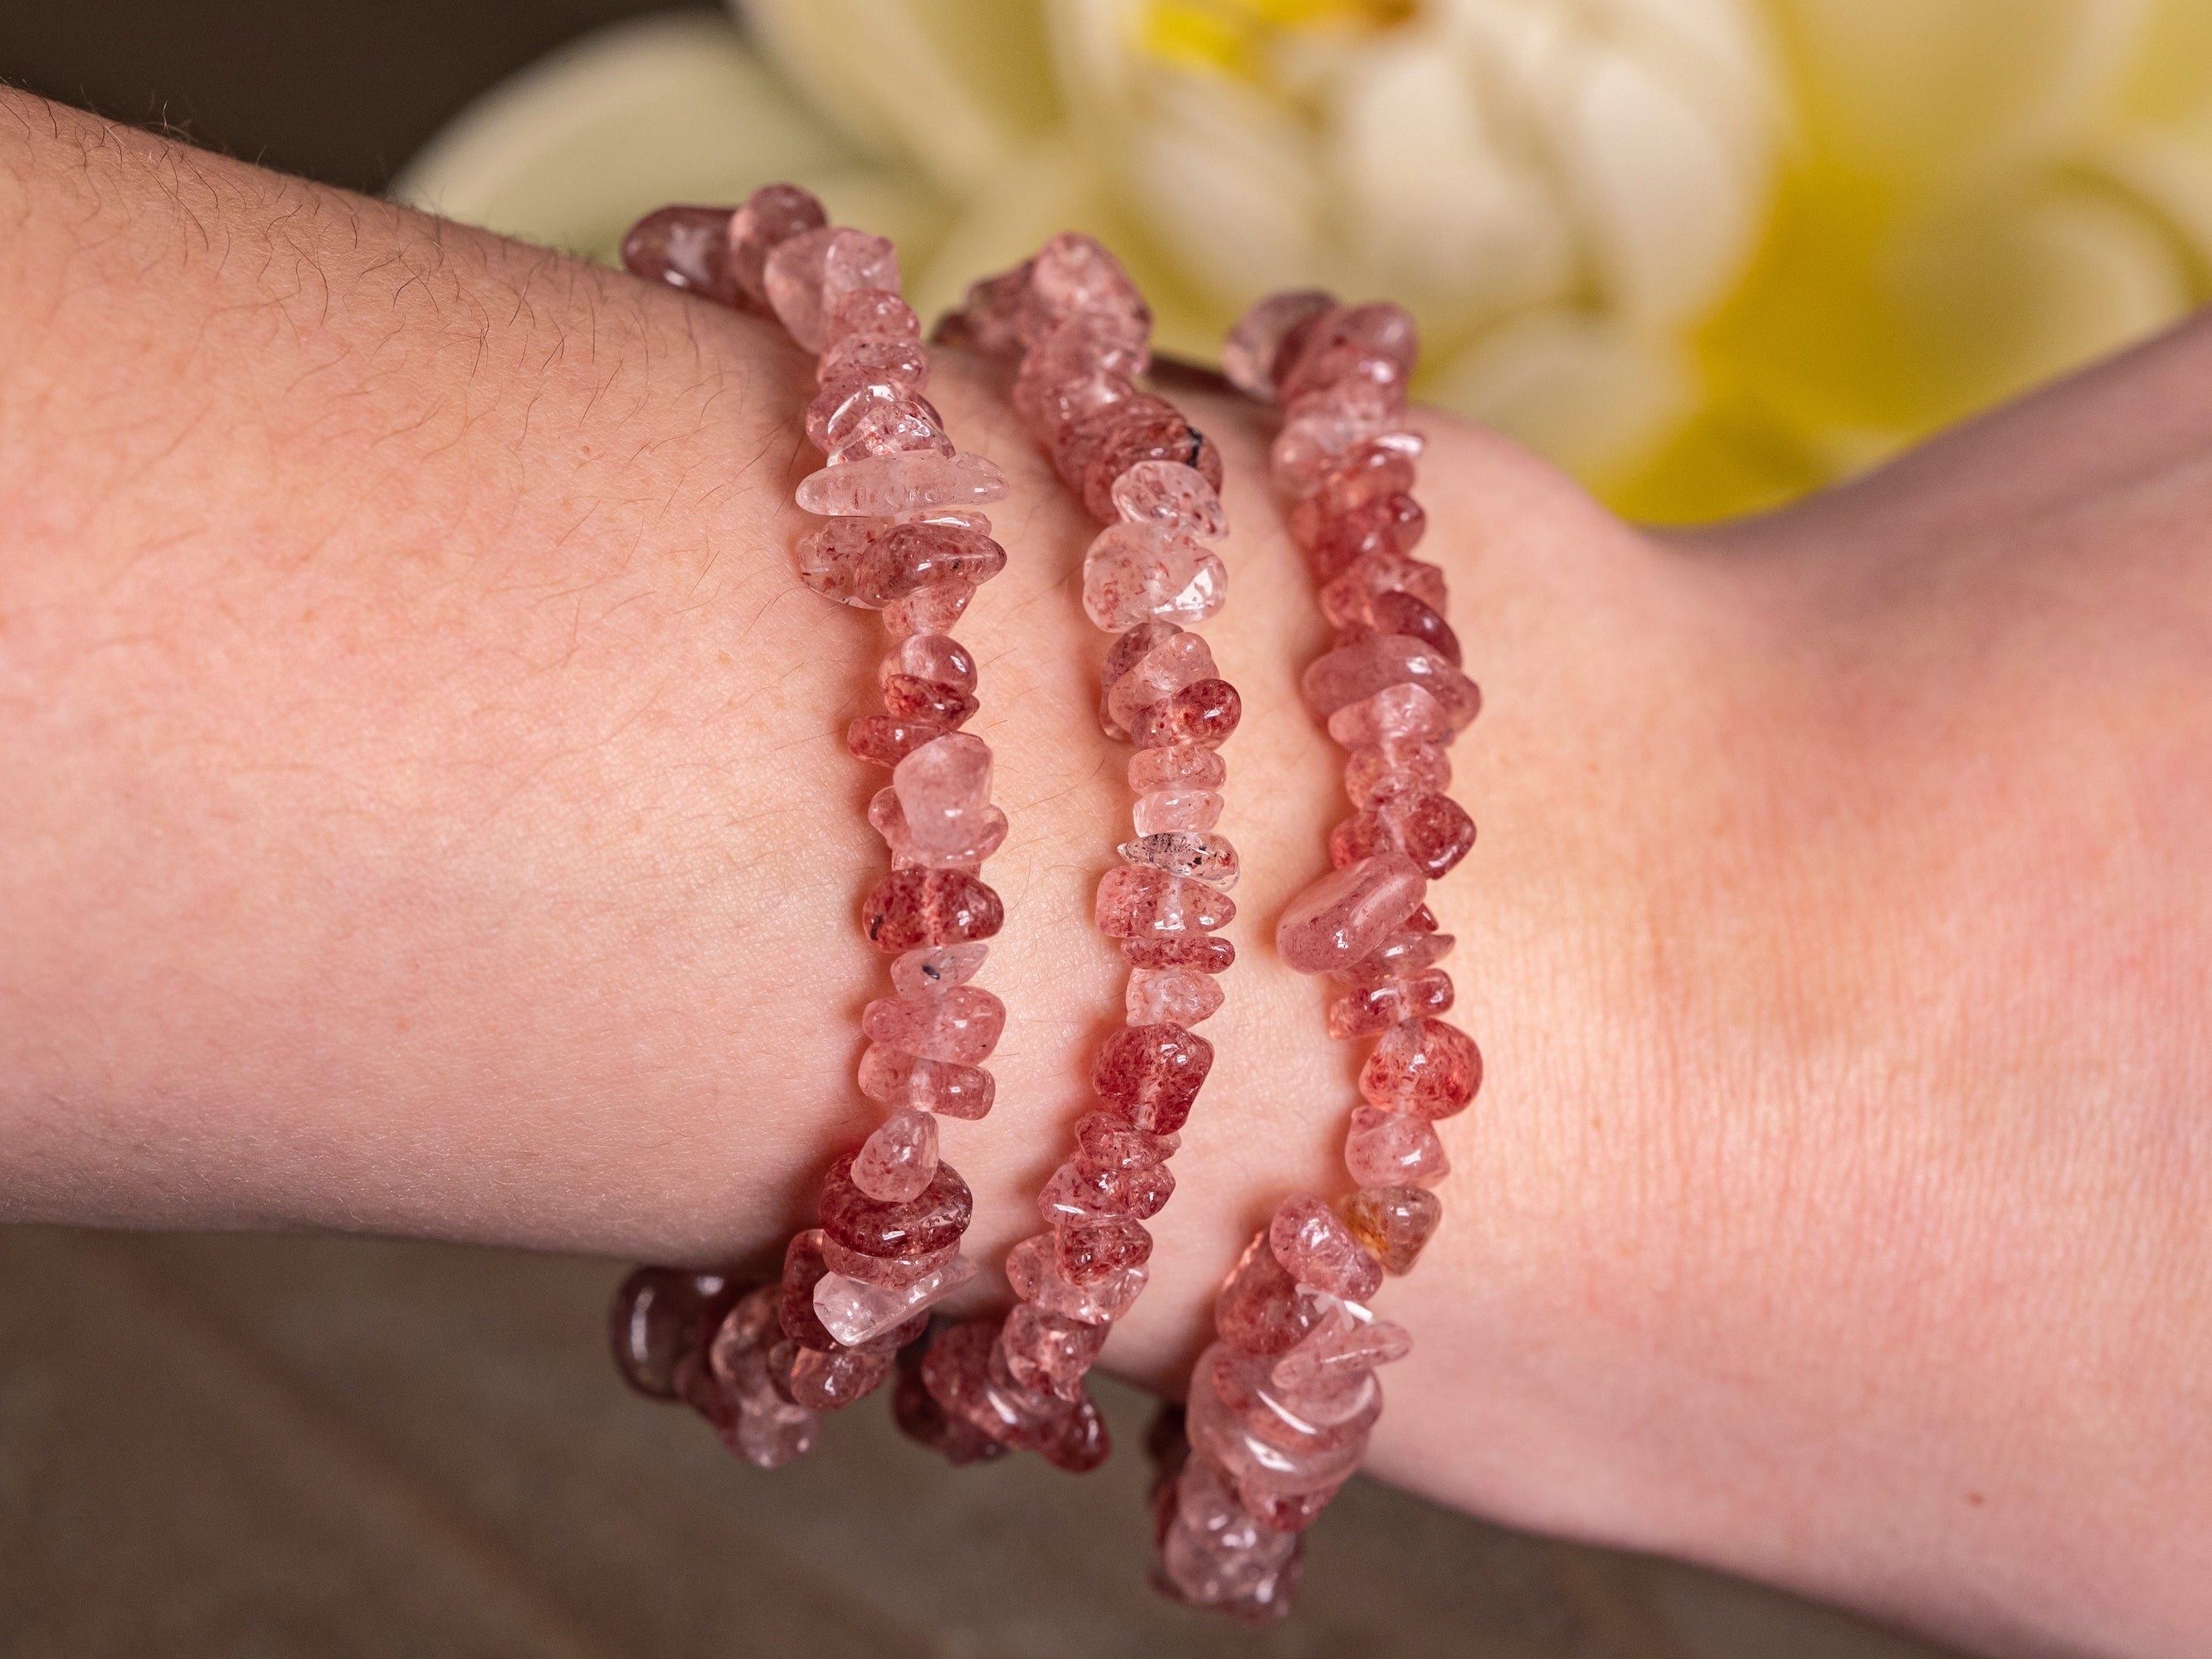 54 Strawberry Crystal Bracelet Images, Stock Photos & Vectors | Shutterstock